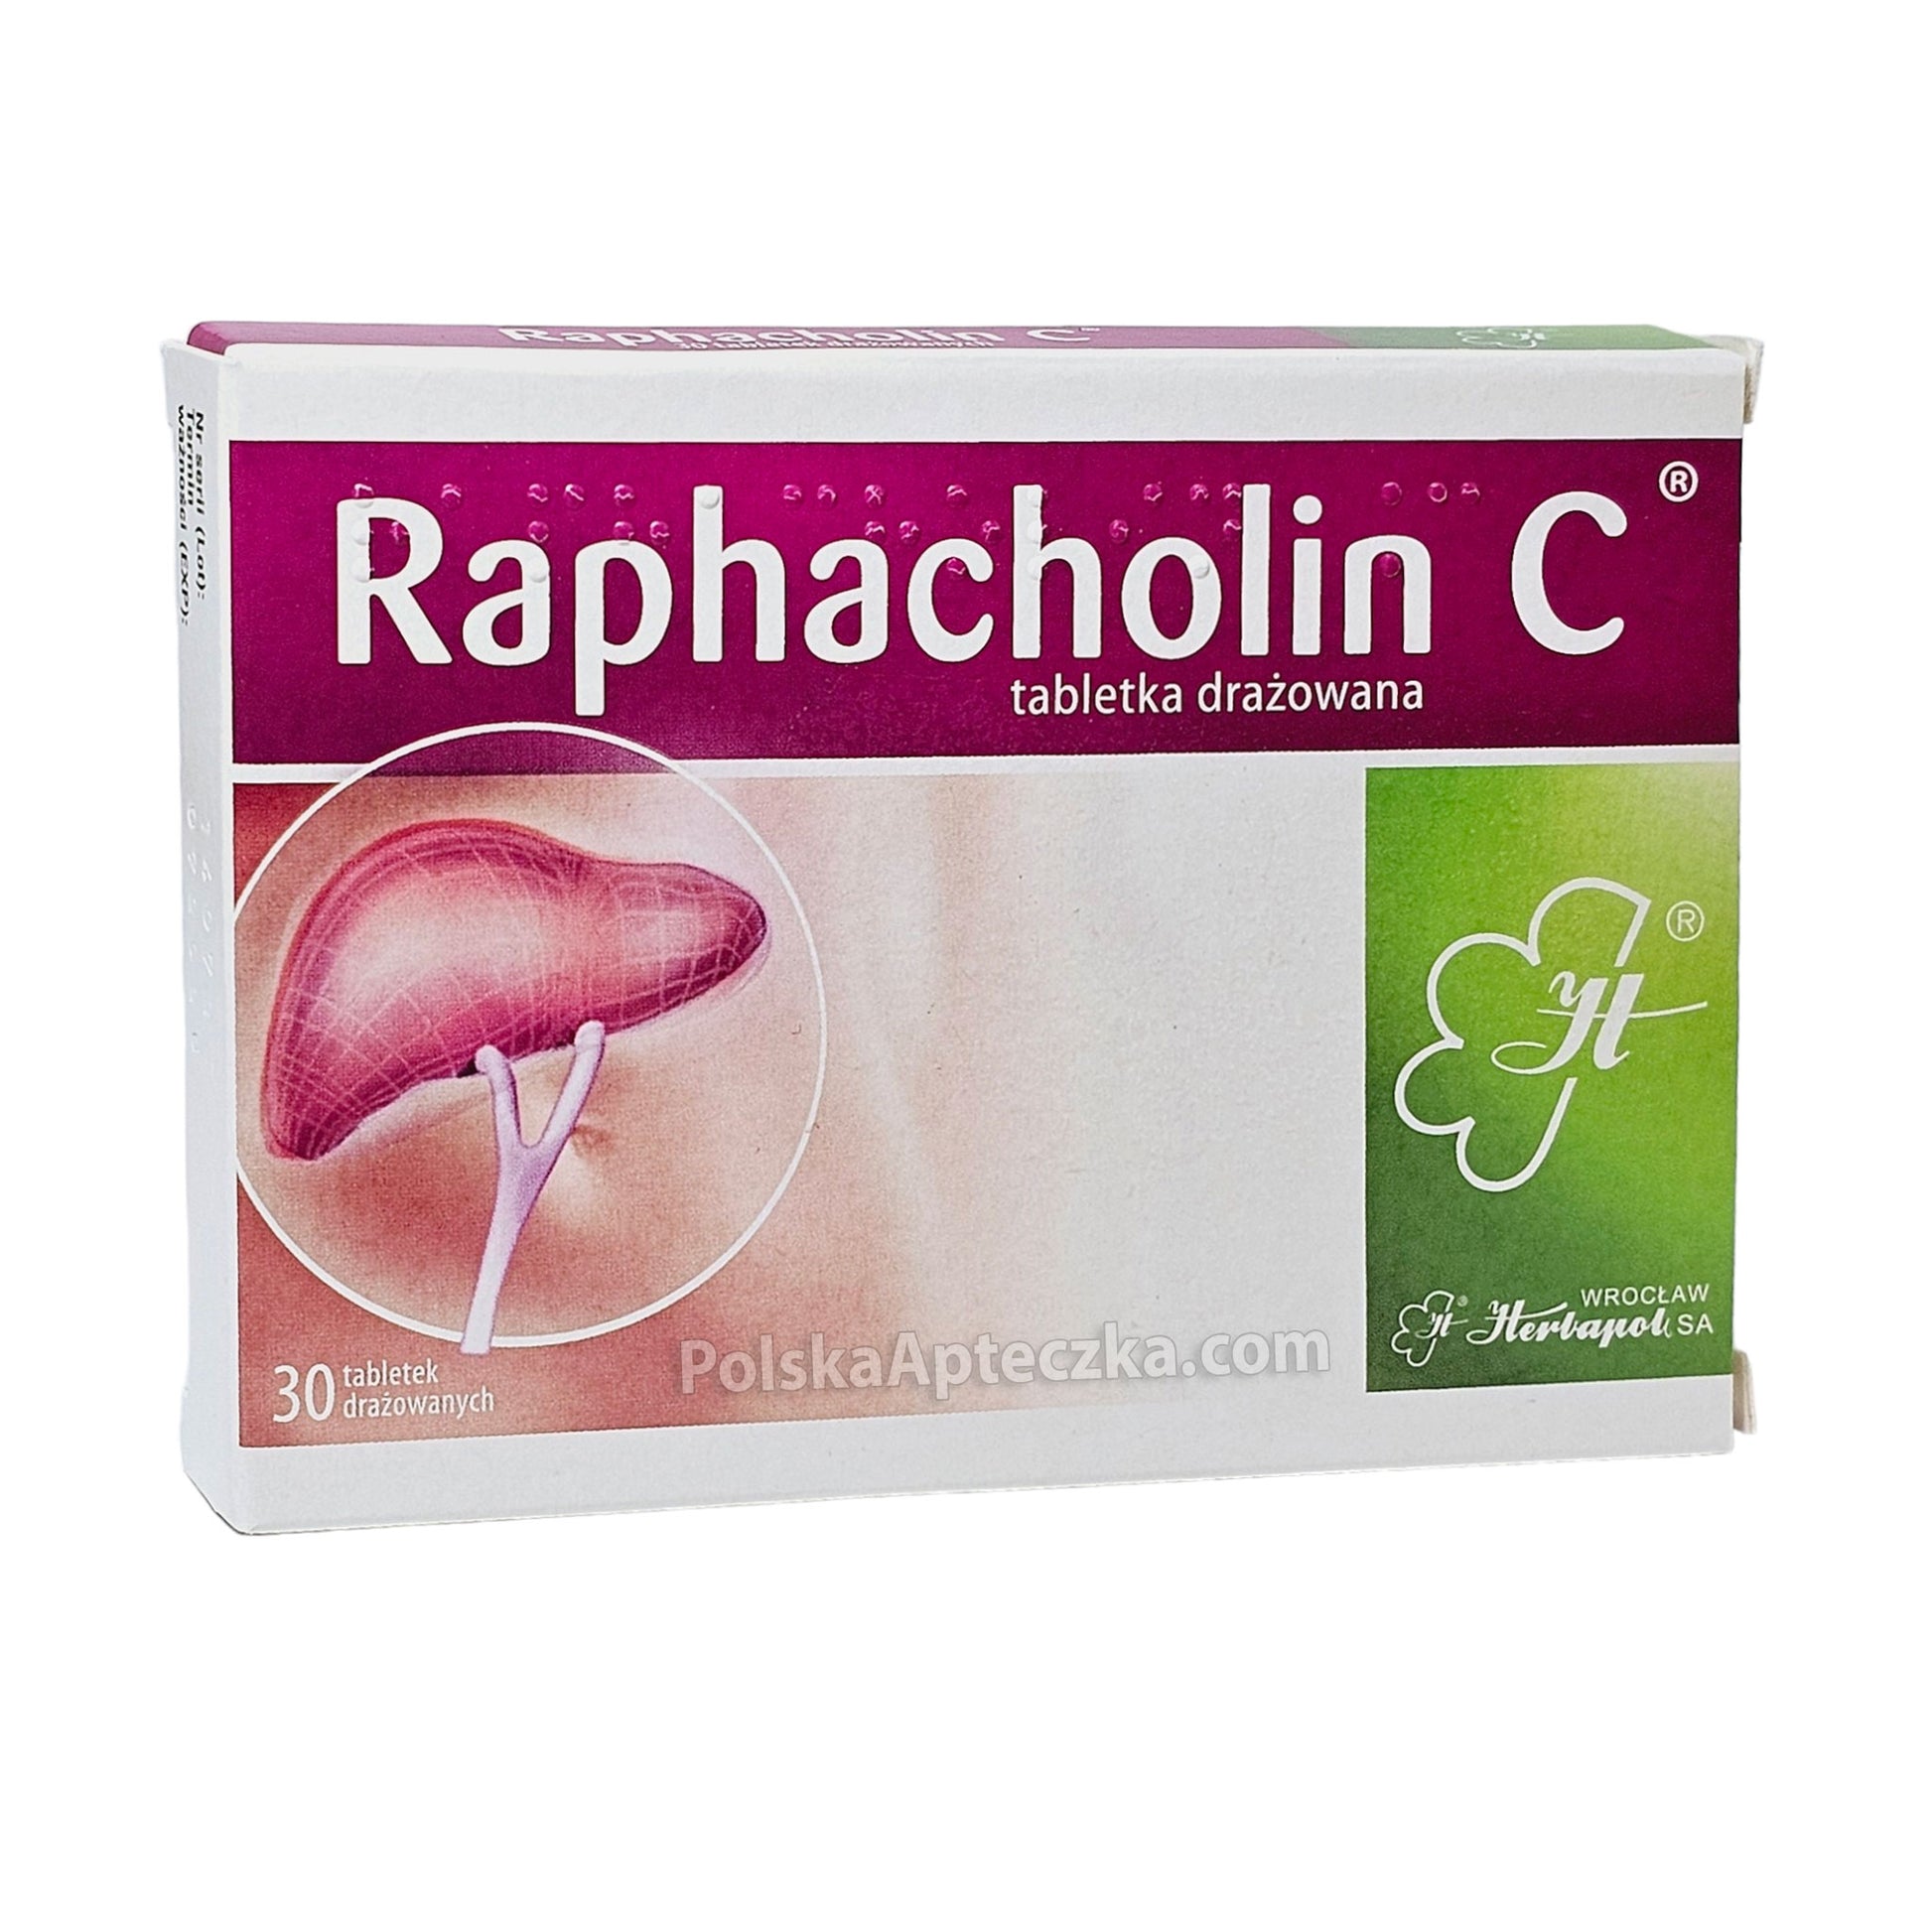 raphacholin c